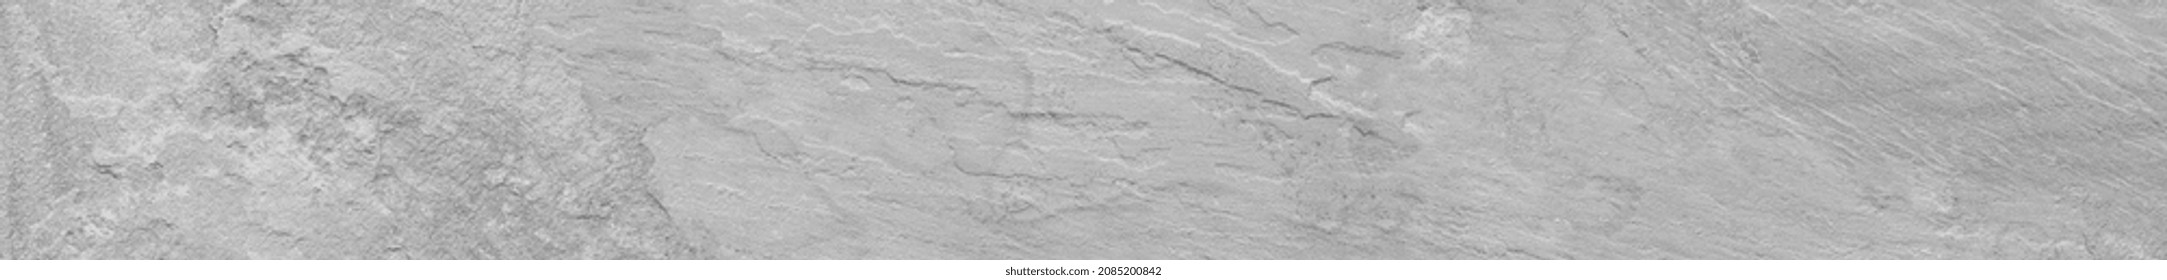 marble texture background, Matt marble texture, natural marble, rustic texture, marbel stone texture for digital wall tiles, natural breccia marble tiles design, granite ceramic TILES